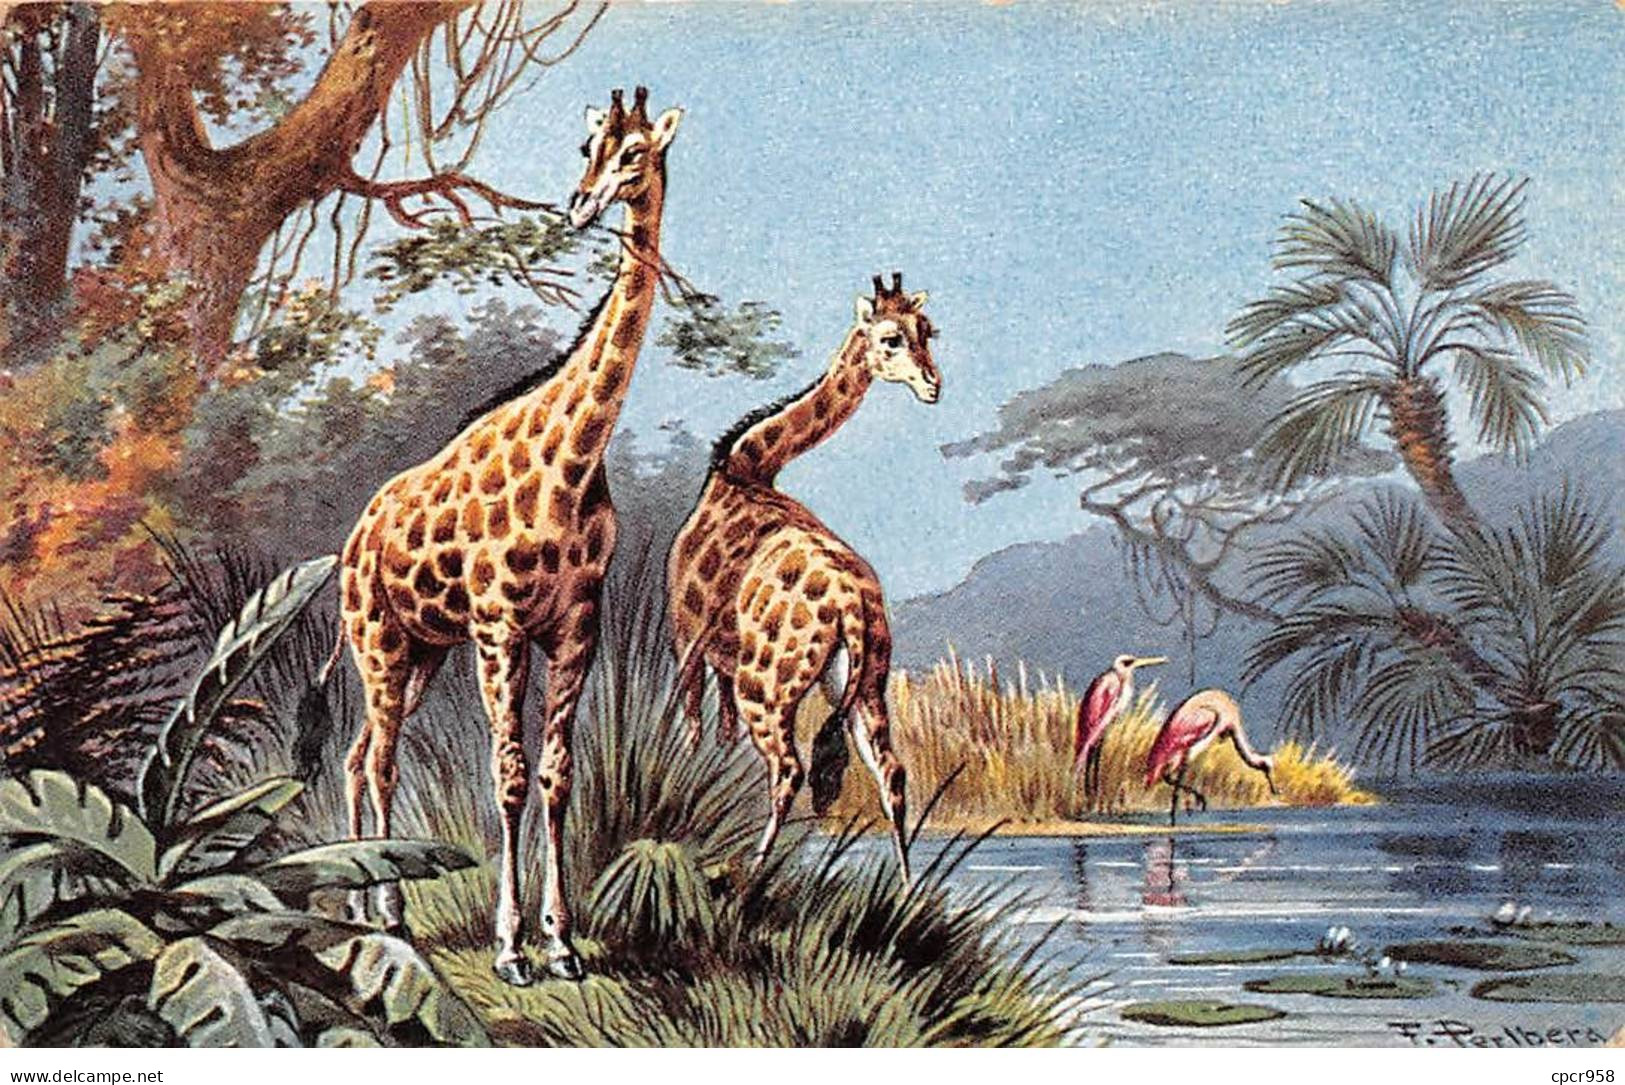 Illustrateur - N°86322 - F. Perlberg - Flamands Roses Et Girafes Les Pieds Dans L'eau - Perlberg, F.